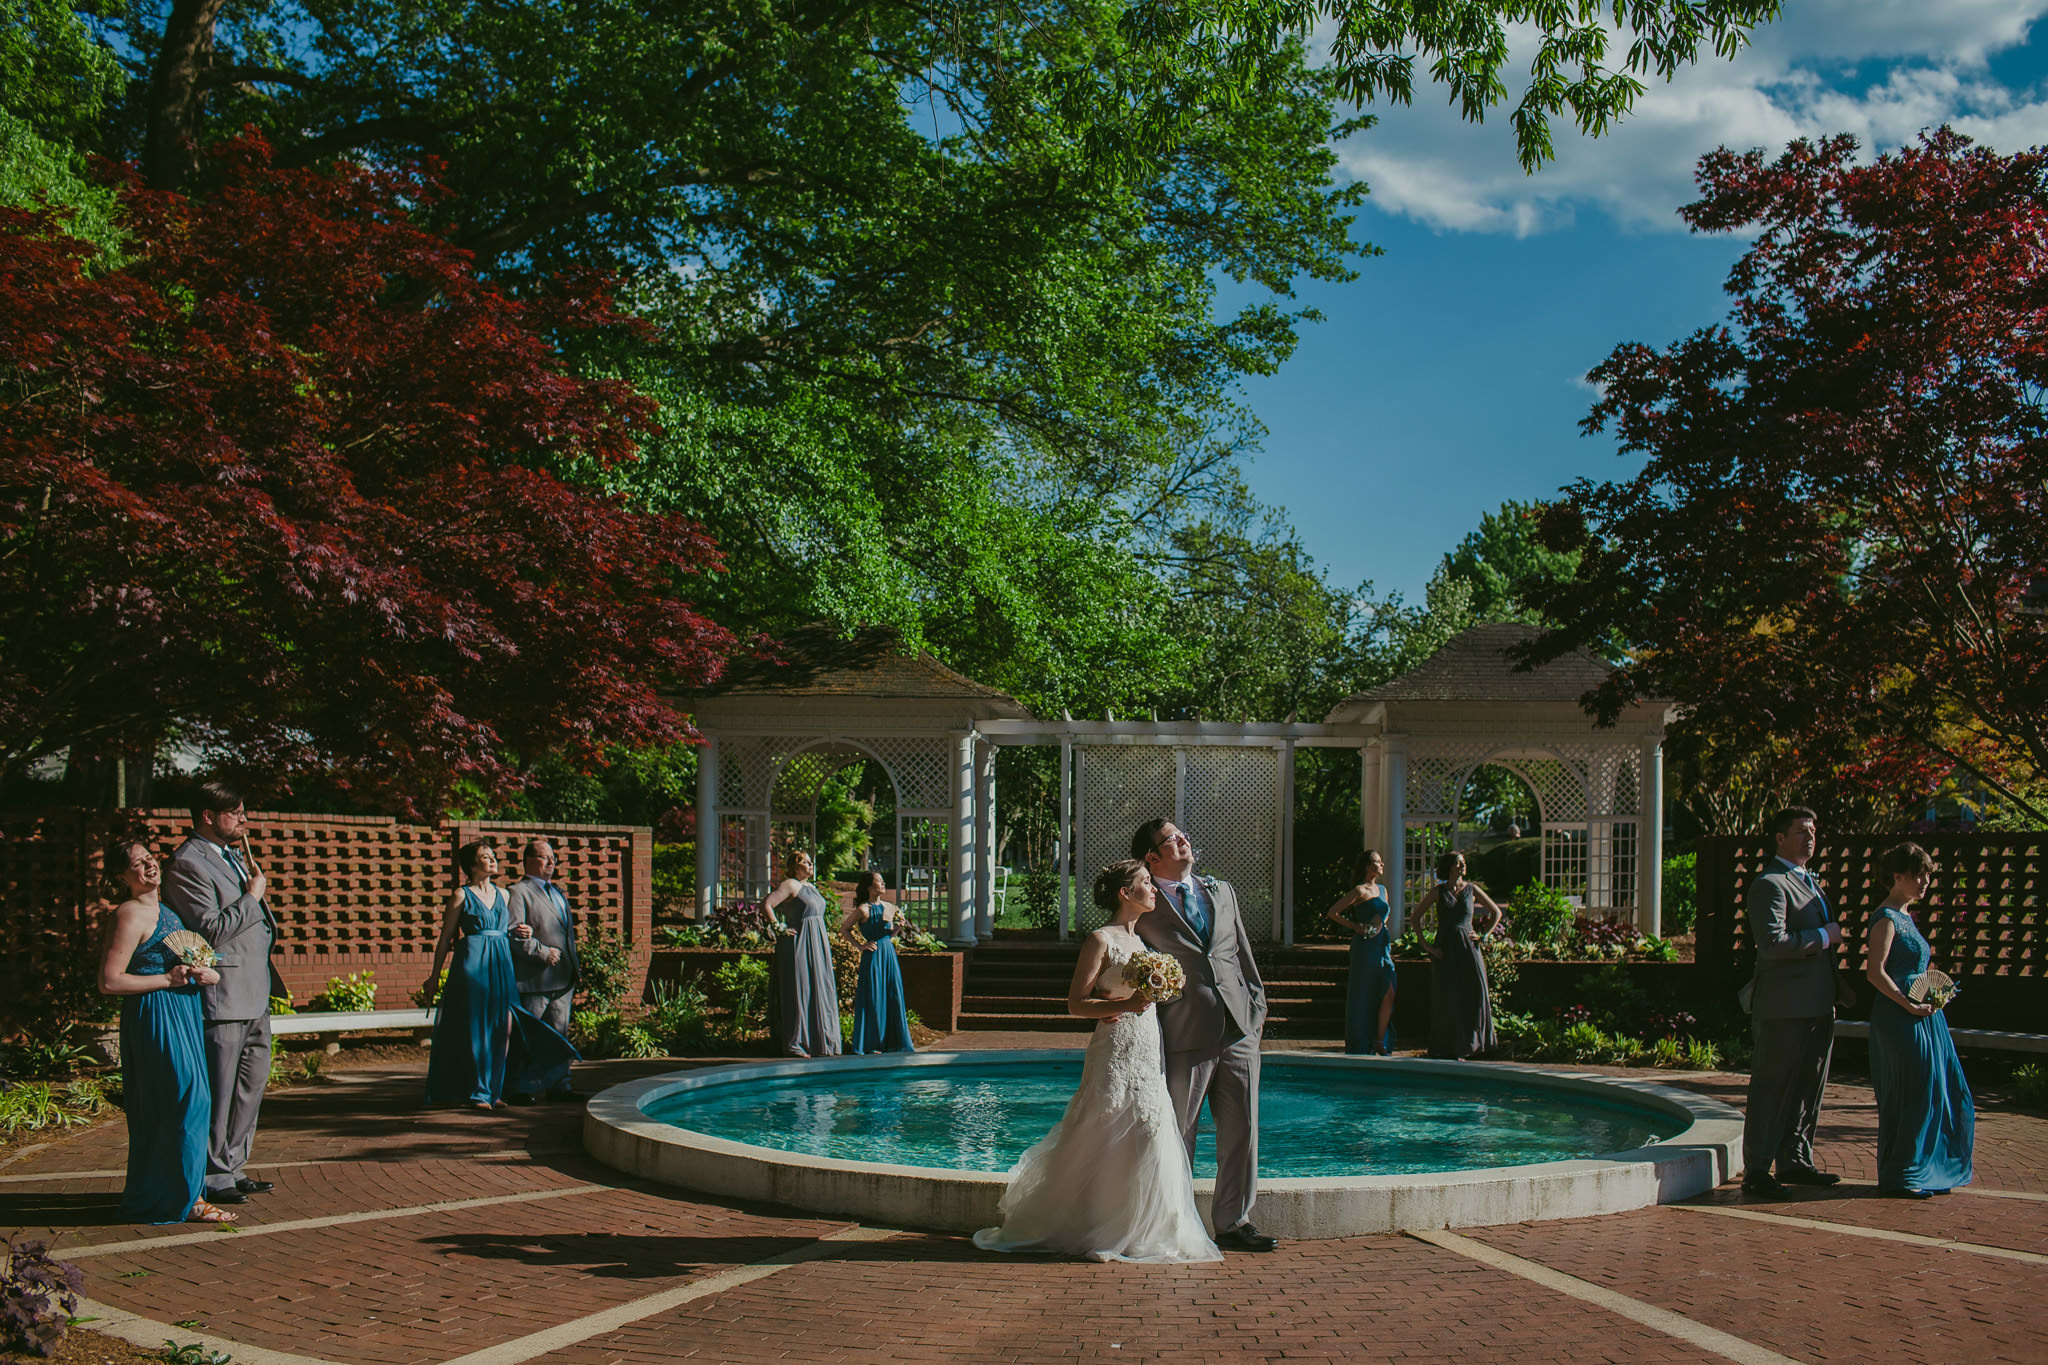 The Shuford House gardens provide a great backdrop for wedding party photos